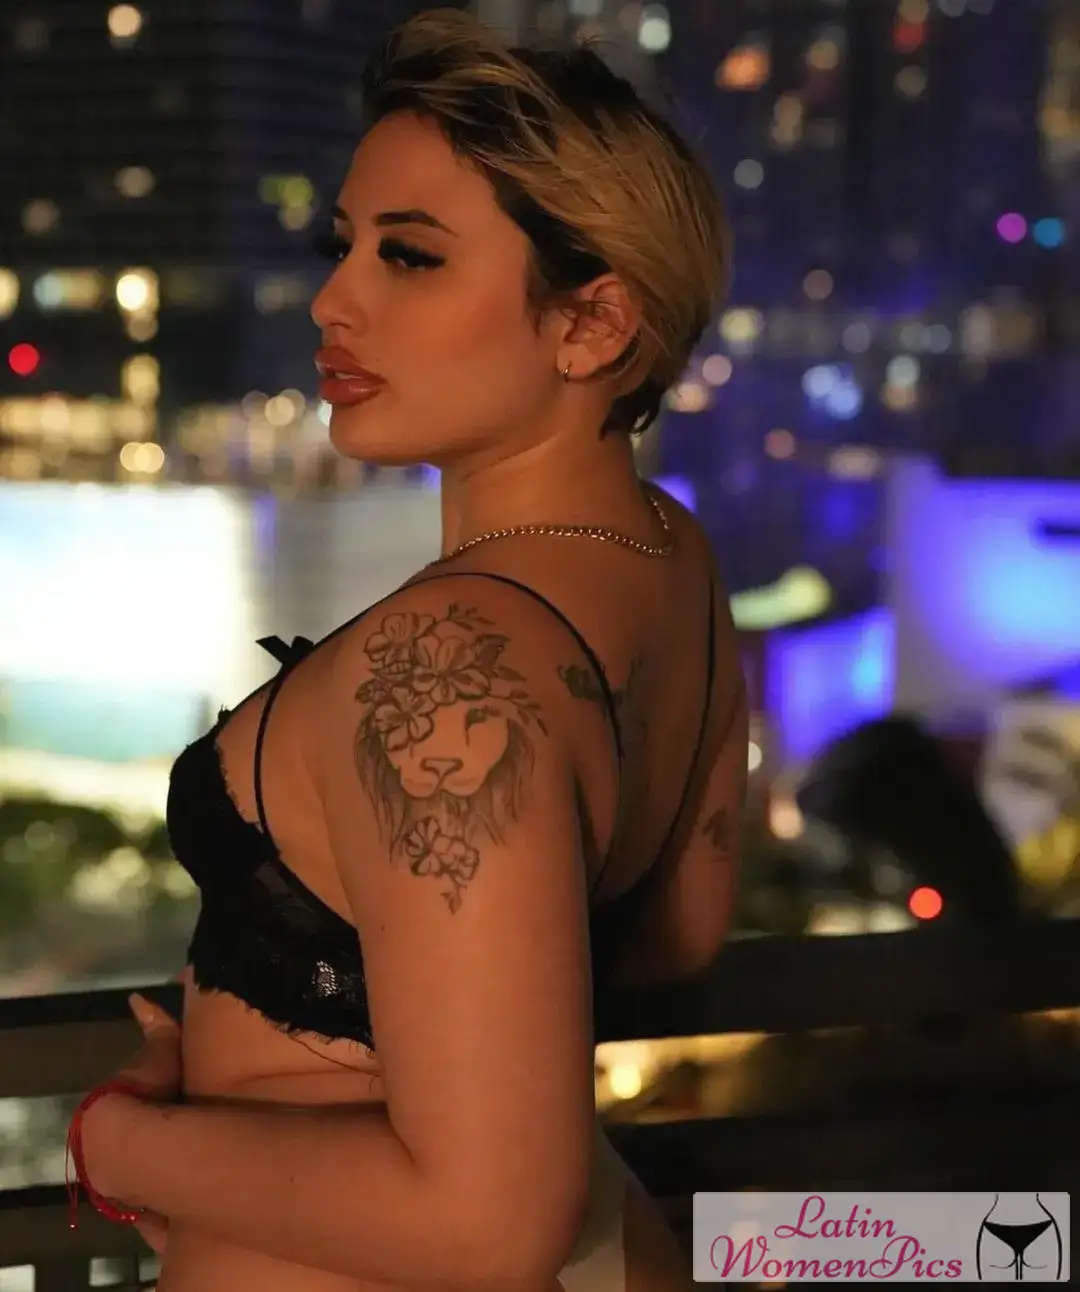 stunning Cuban female pic